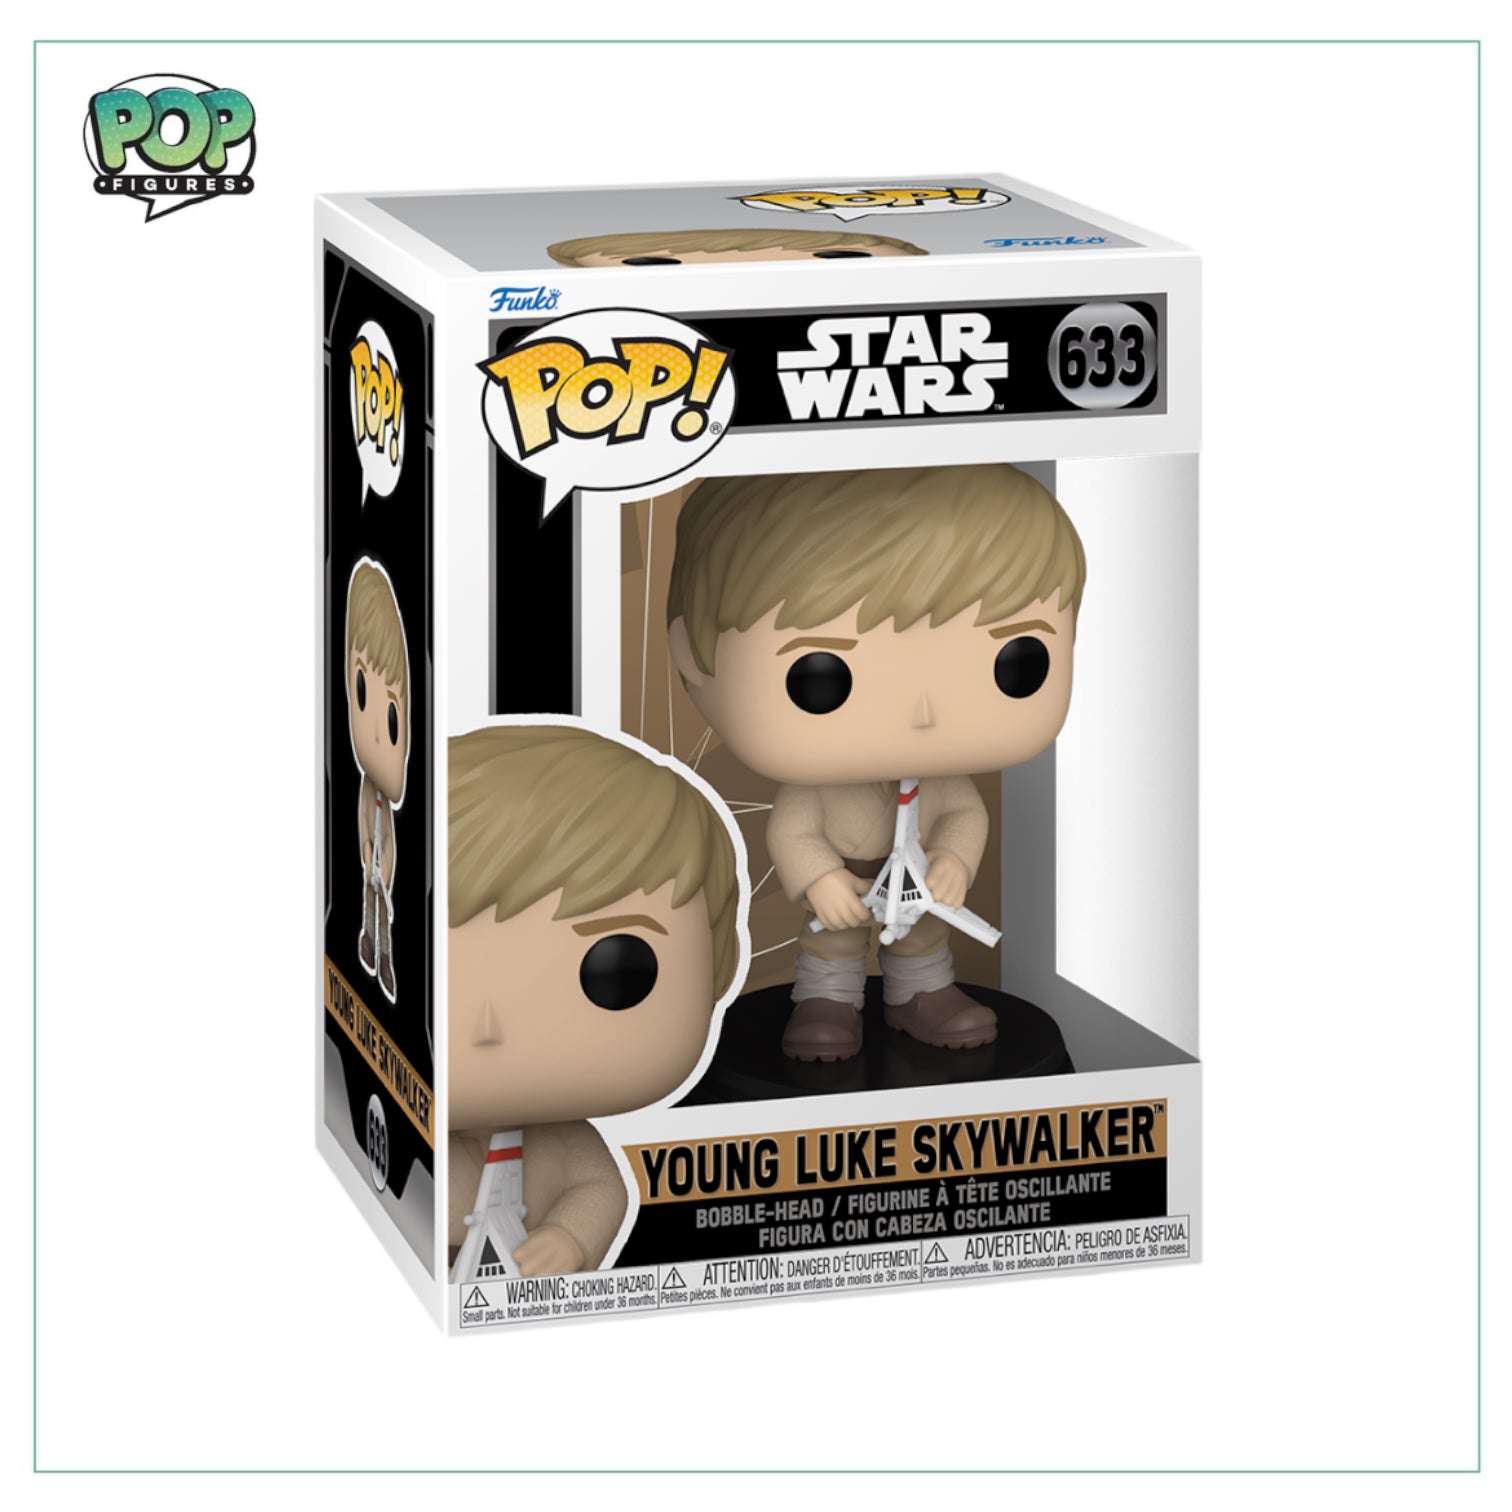 Young Luke Skywalker #633 Funko Pop! Star Wars Obi-Wan Kenobi